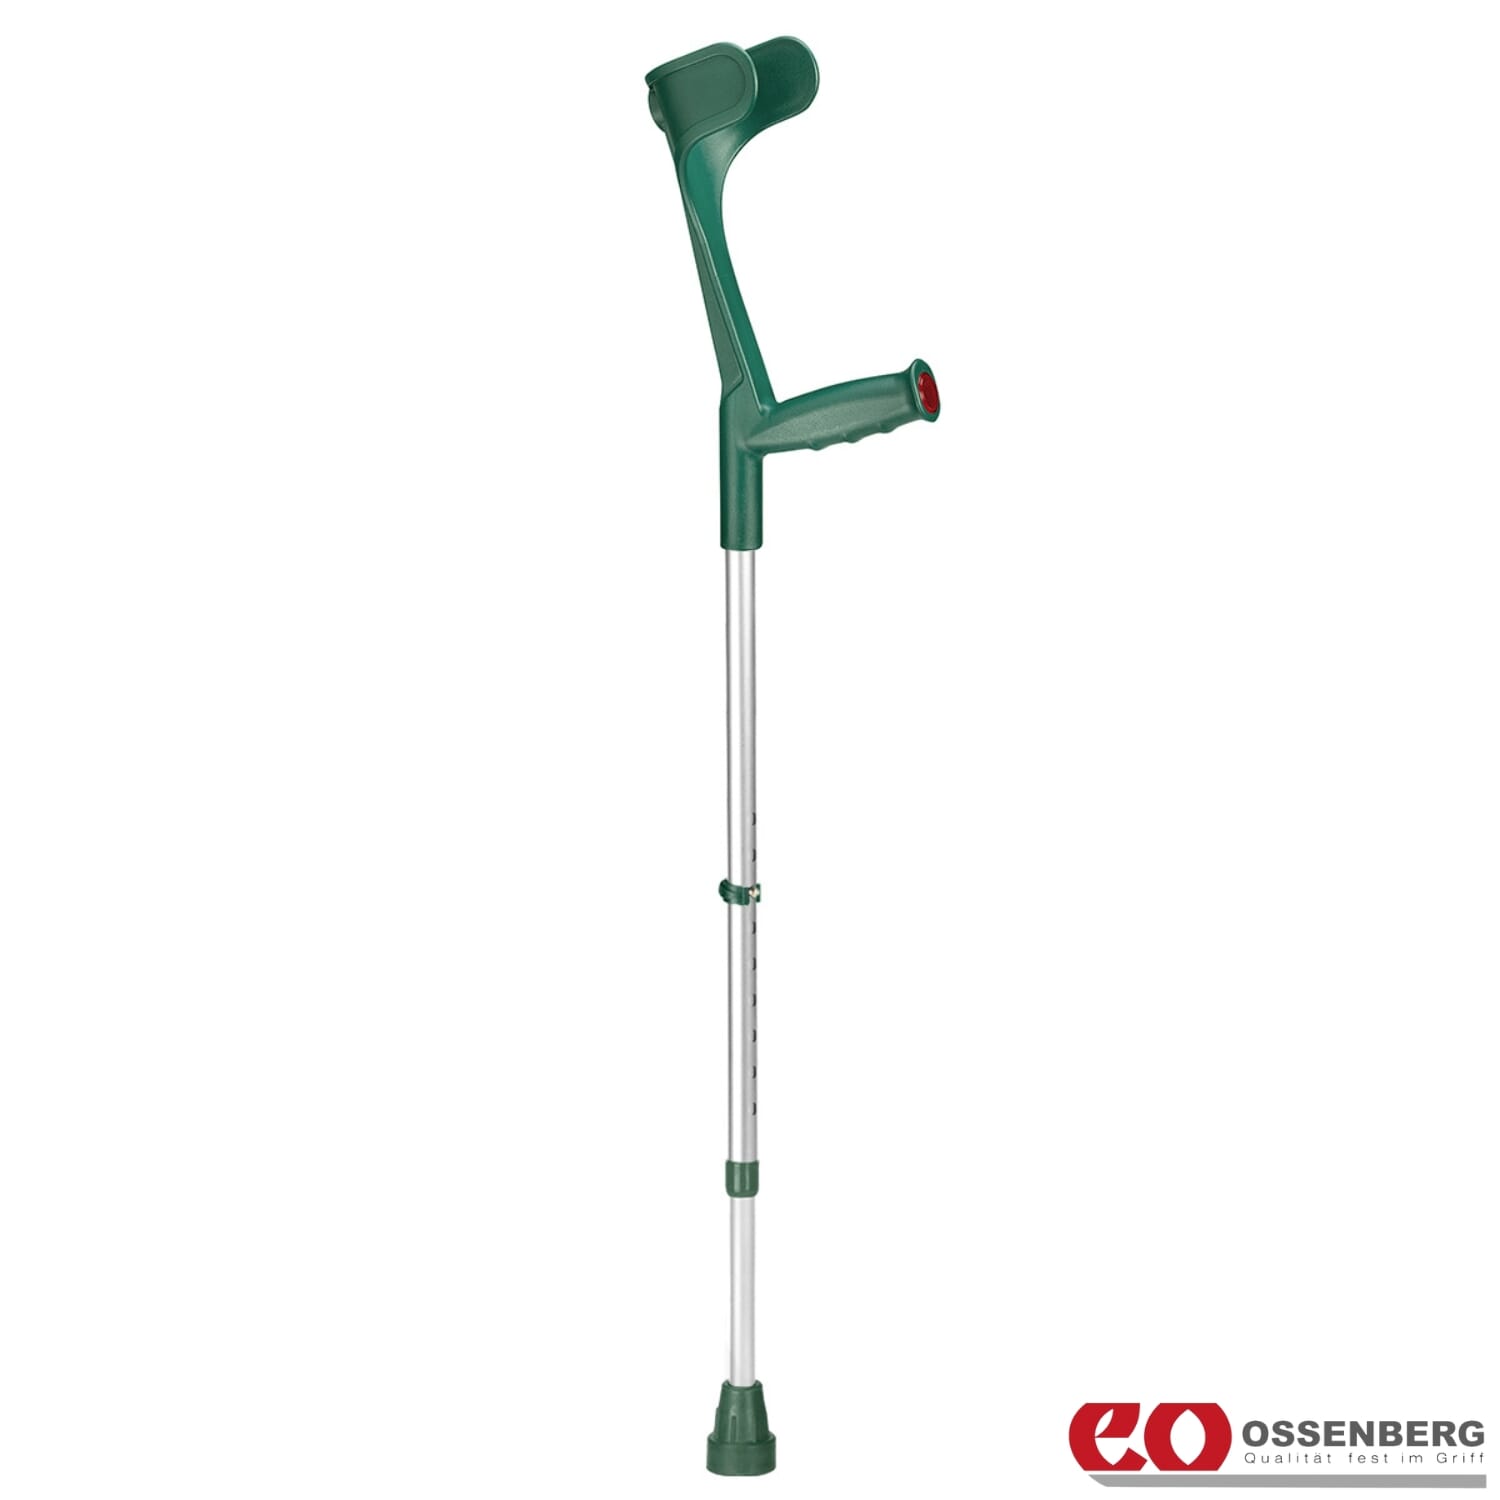 View Ossenberg Open Cuff Crutches Green Single information